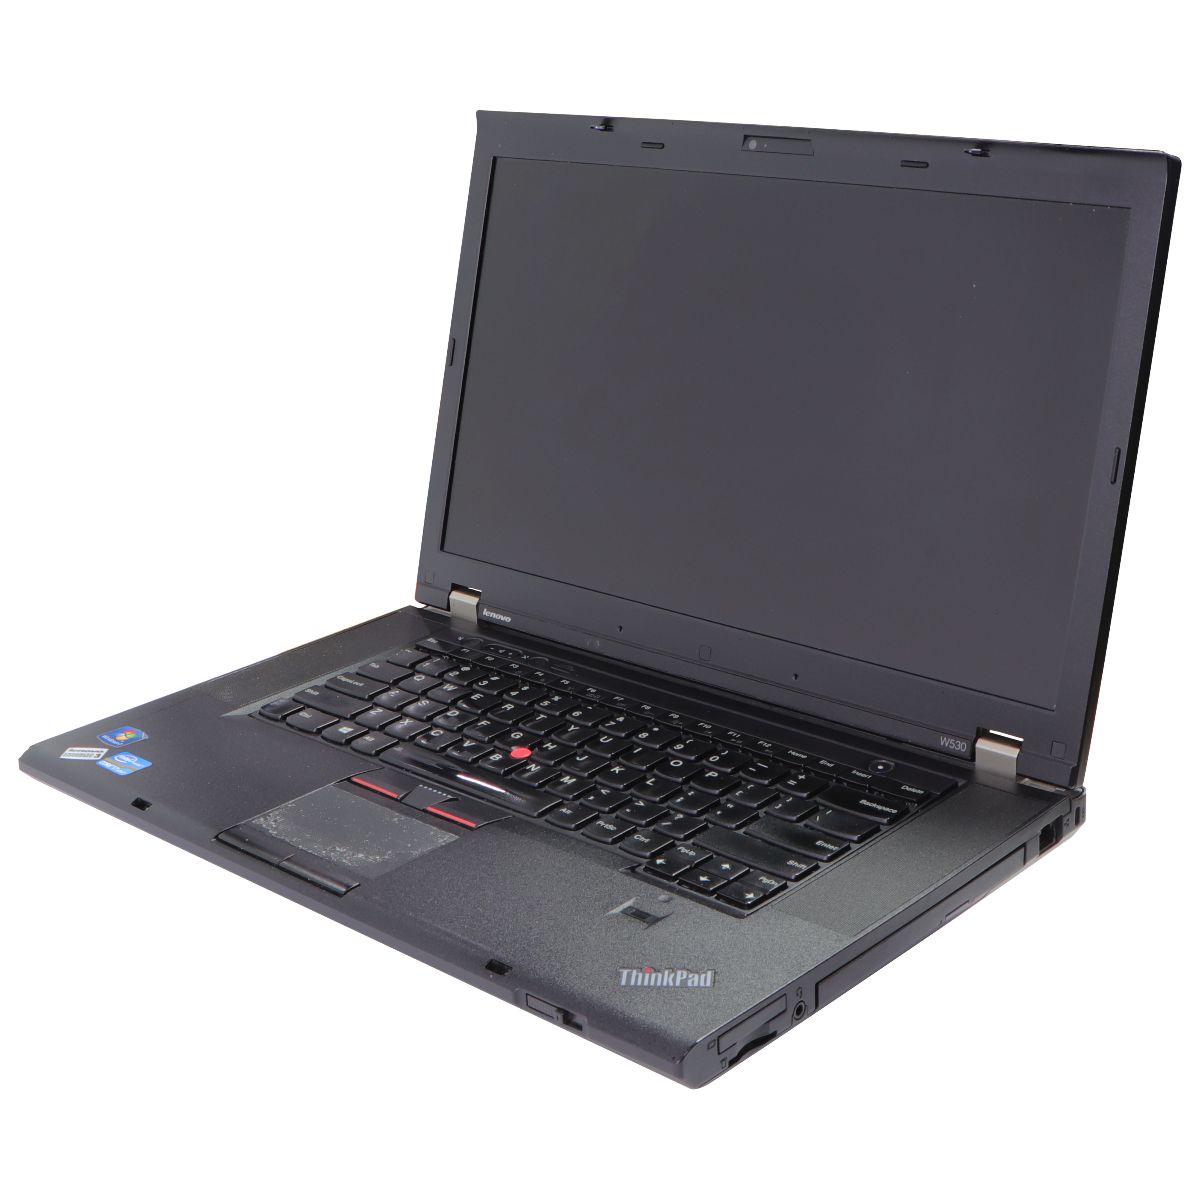 Lenovo Thinkpad W530 (15.6) FHD Laptop (2438-59U) i7-3840QM/500GB HDD/8GB/7 Pro Laptops - PC Laptops & Netbooks Lenovo    - Simple Cell Bulk Wholesale Pricing - USA Seller